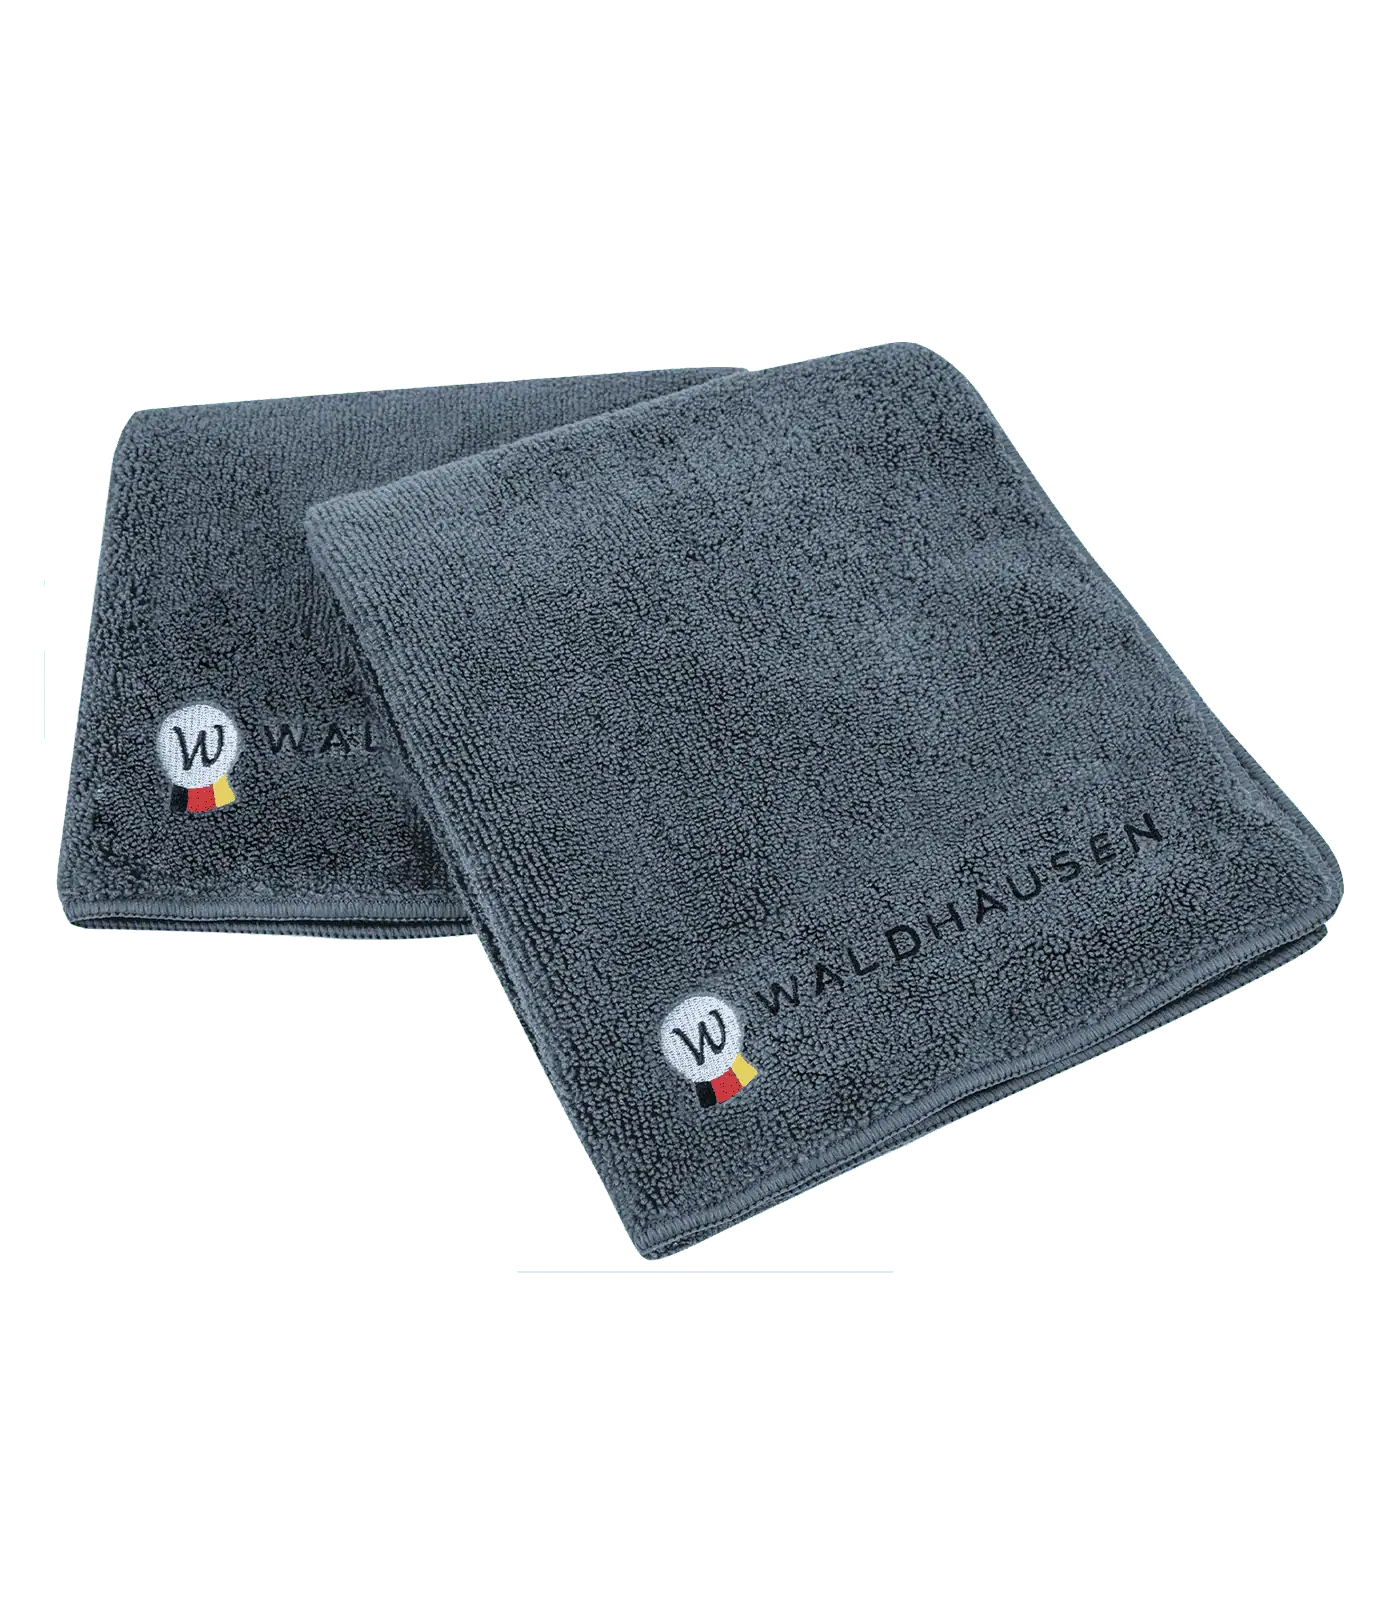 Asciugamano microfibra Waldhausen, pacco da 2